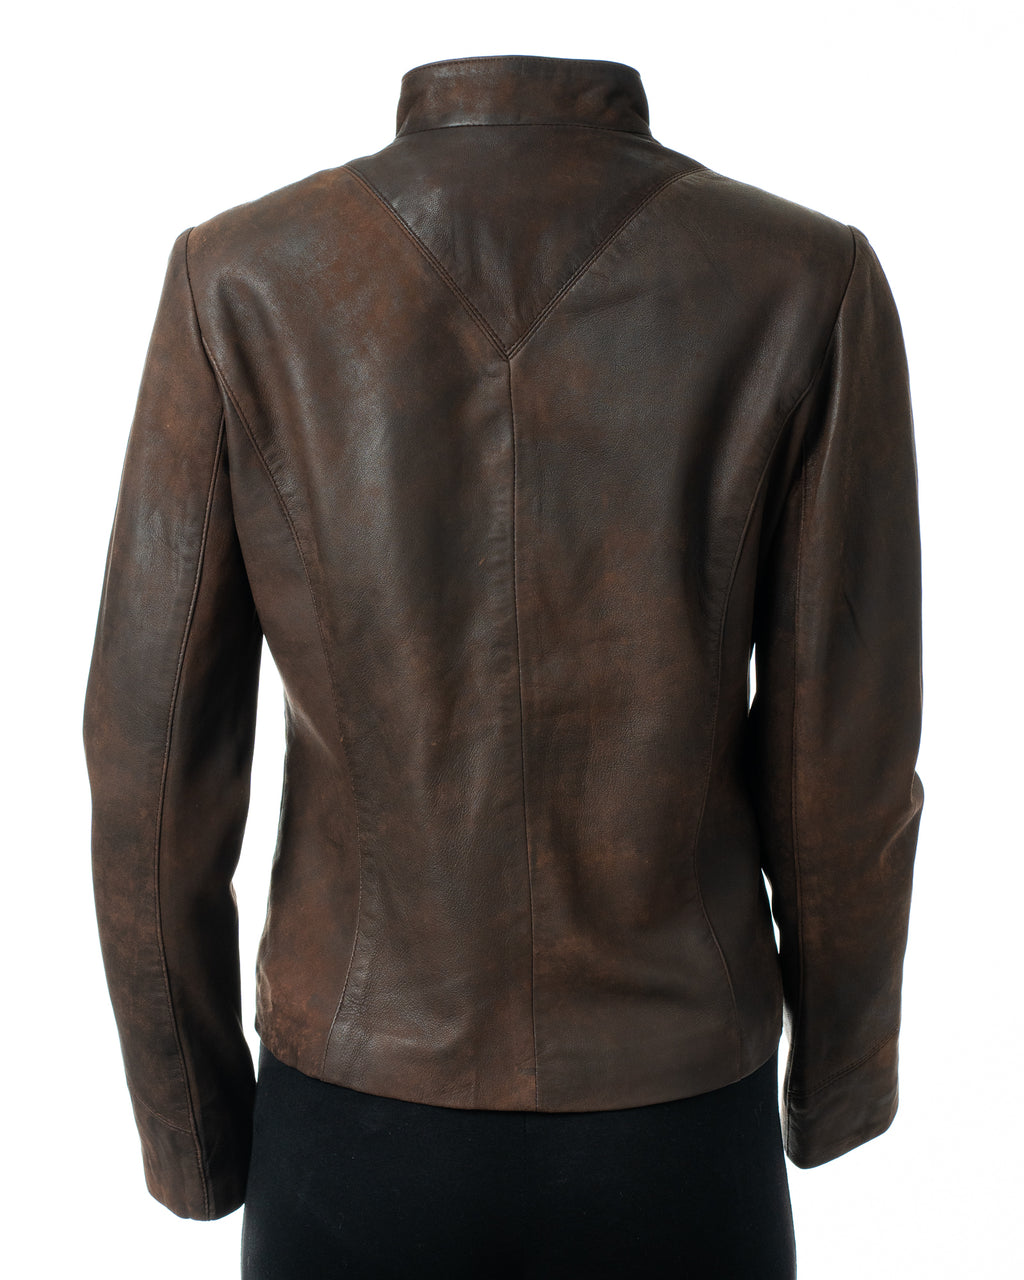 Ladies Buff Brown Plain Short Zipped Leather Jacket: Angelina